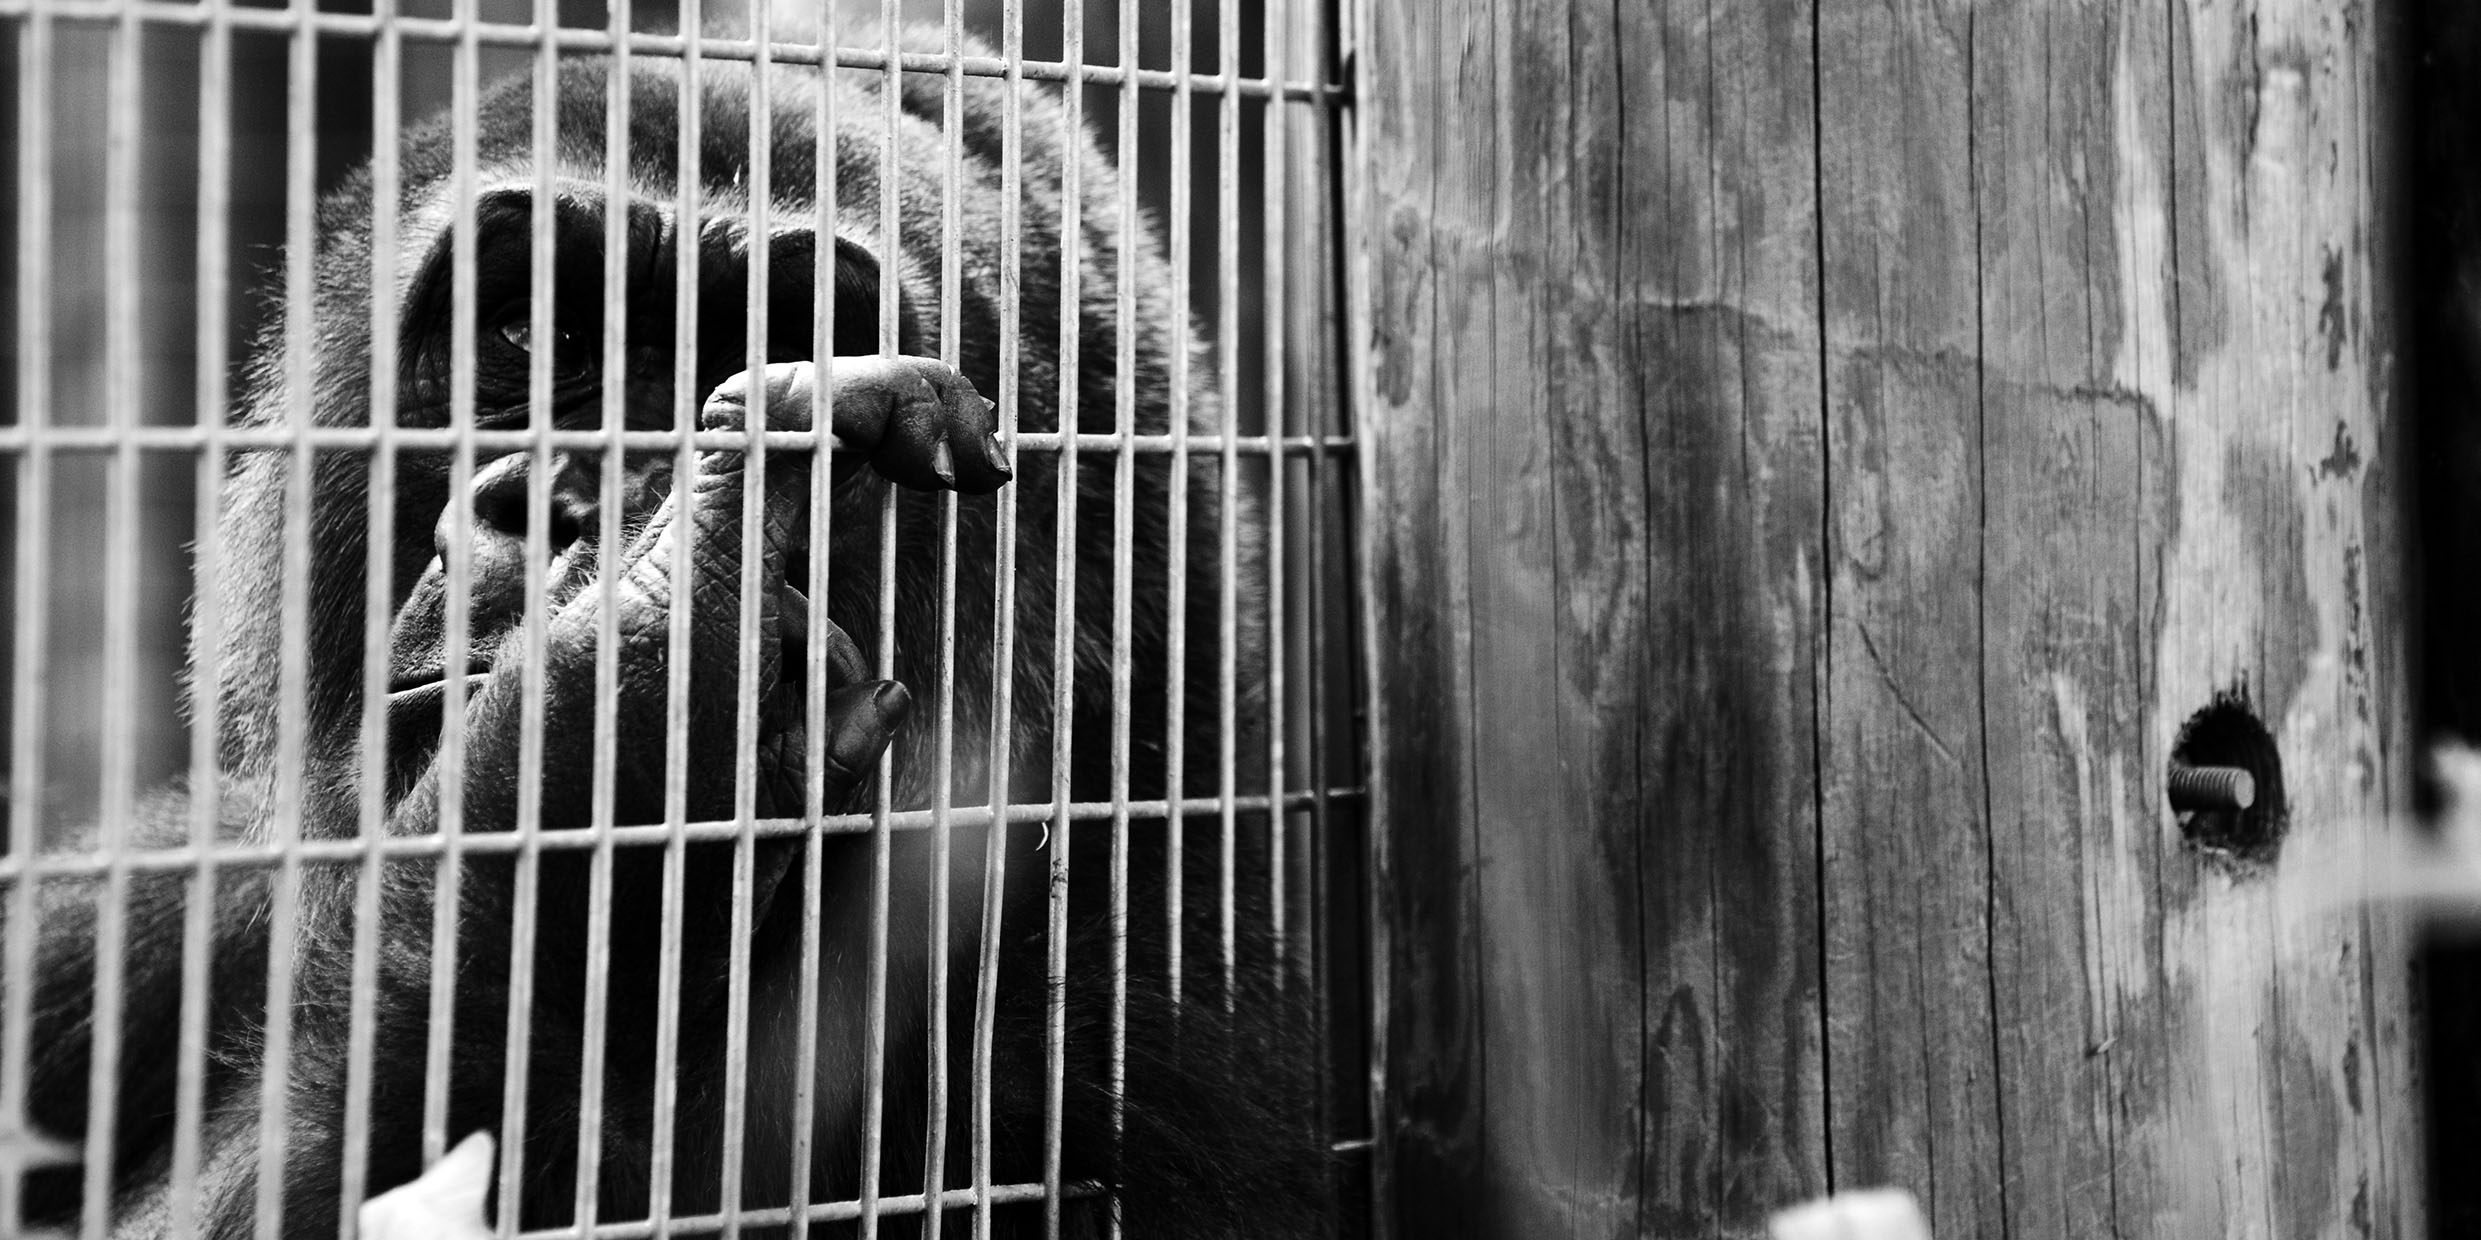 The sadness of captivity